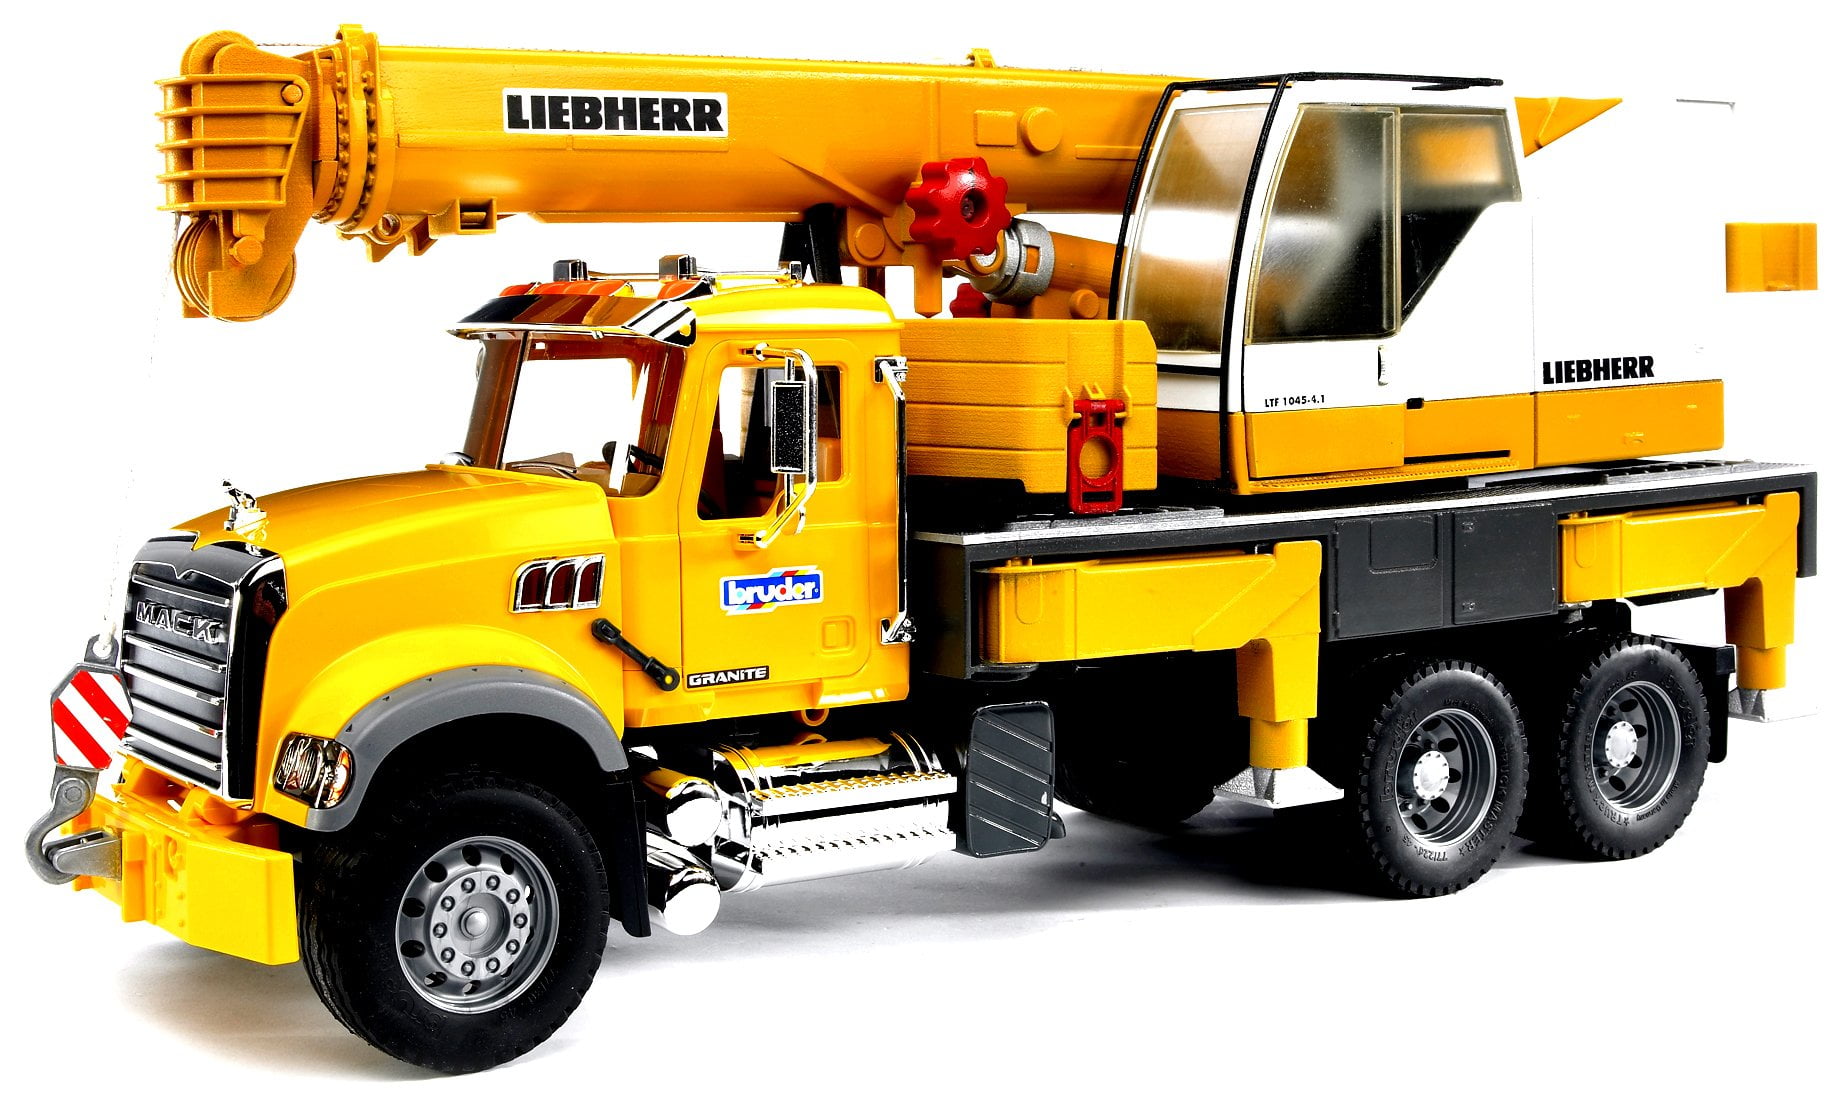 Bruder MACK Granite Liebherr Crane Truck 02818 Kids Play NEW 